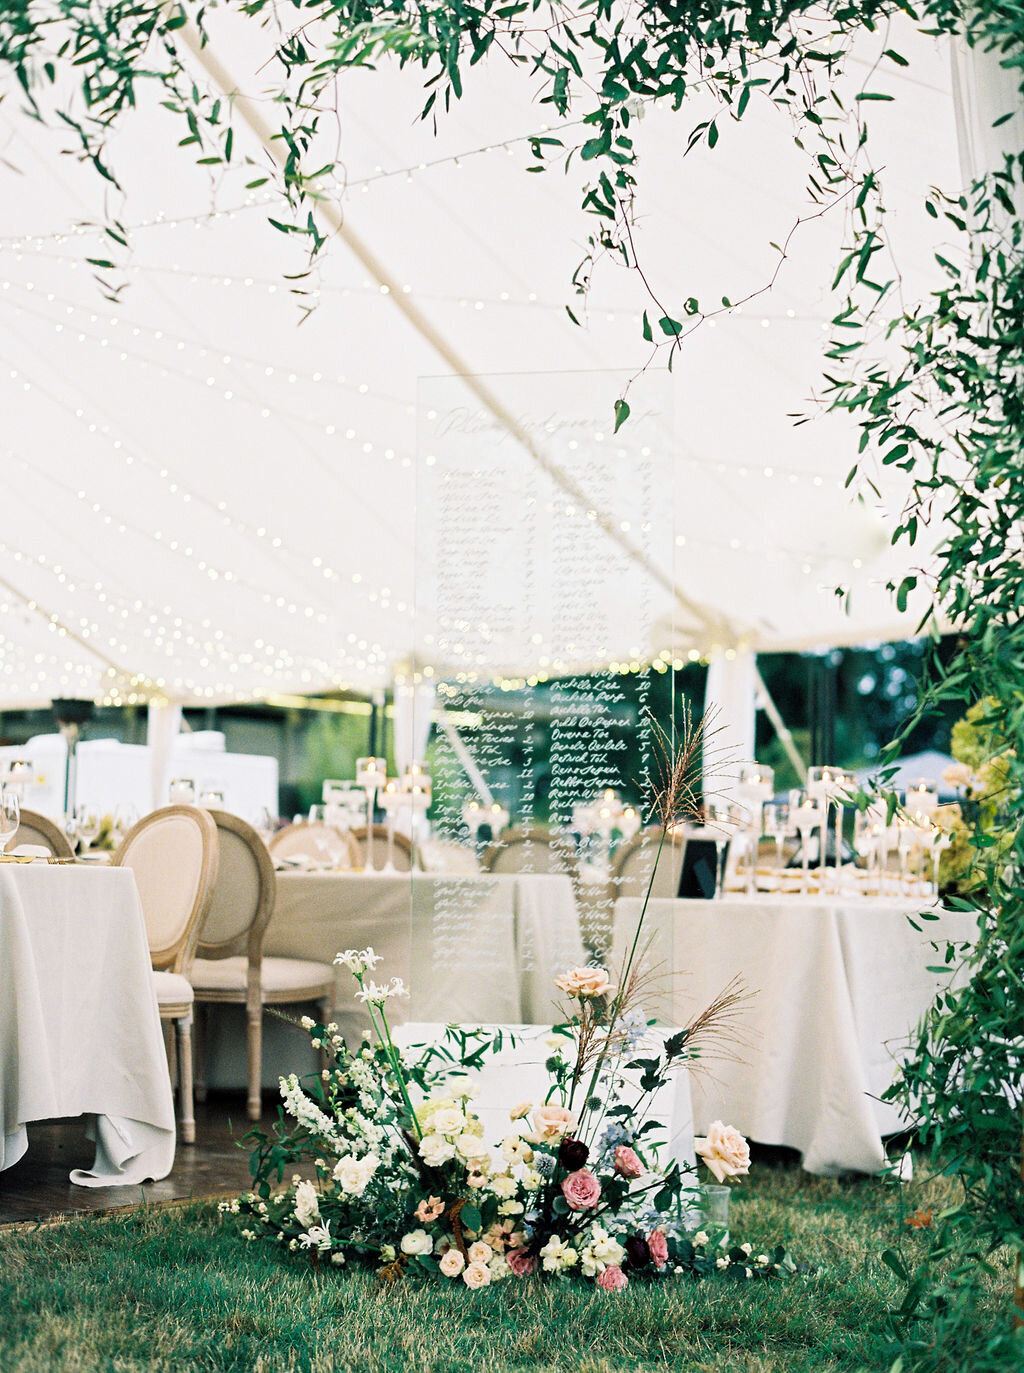 ubc-garden-wedding-luxury-tent-decor